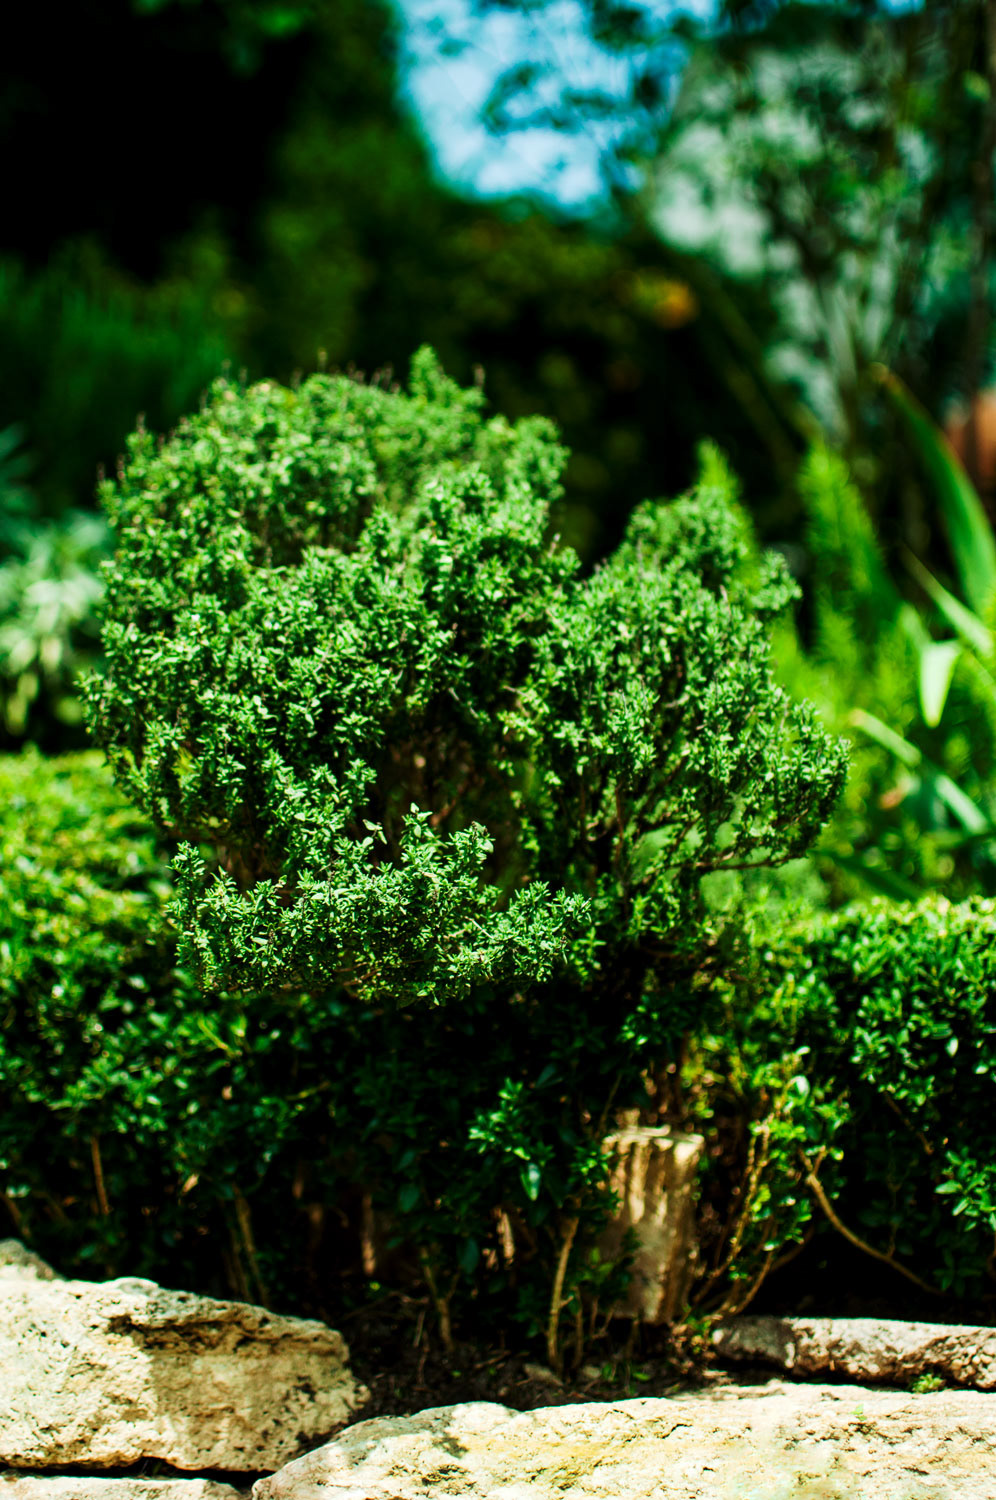 garden Nature ortdoor colors Film Camera